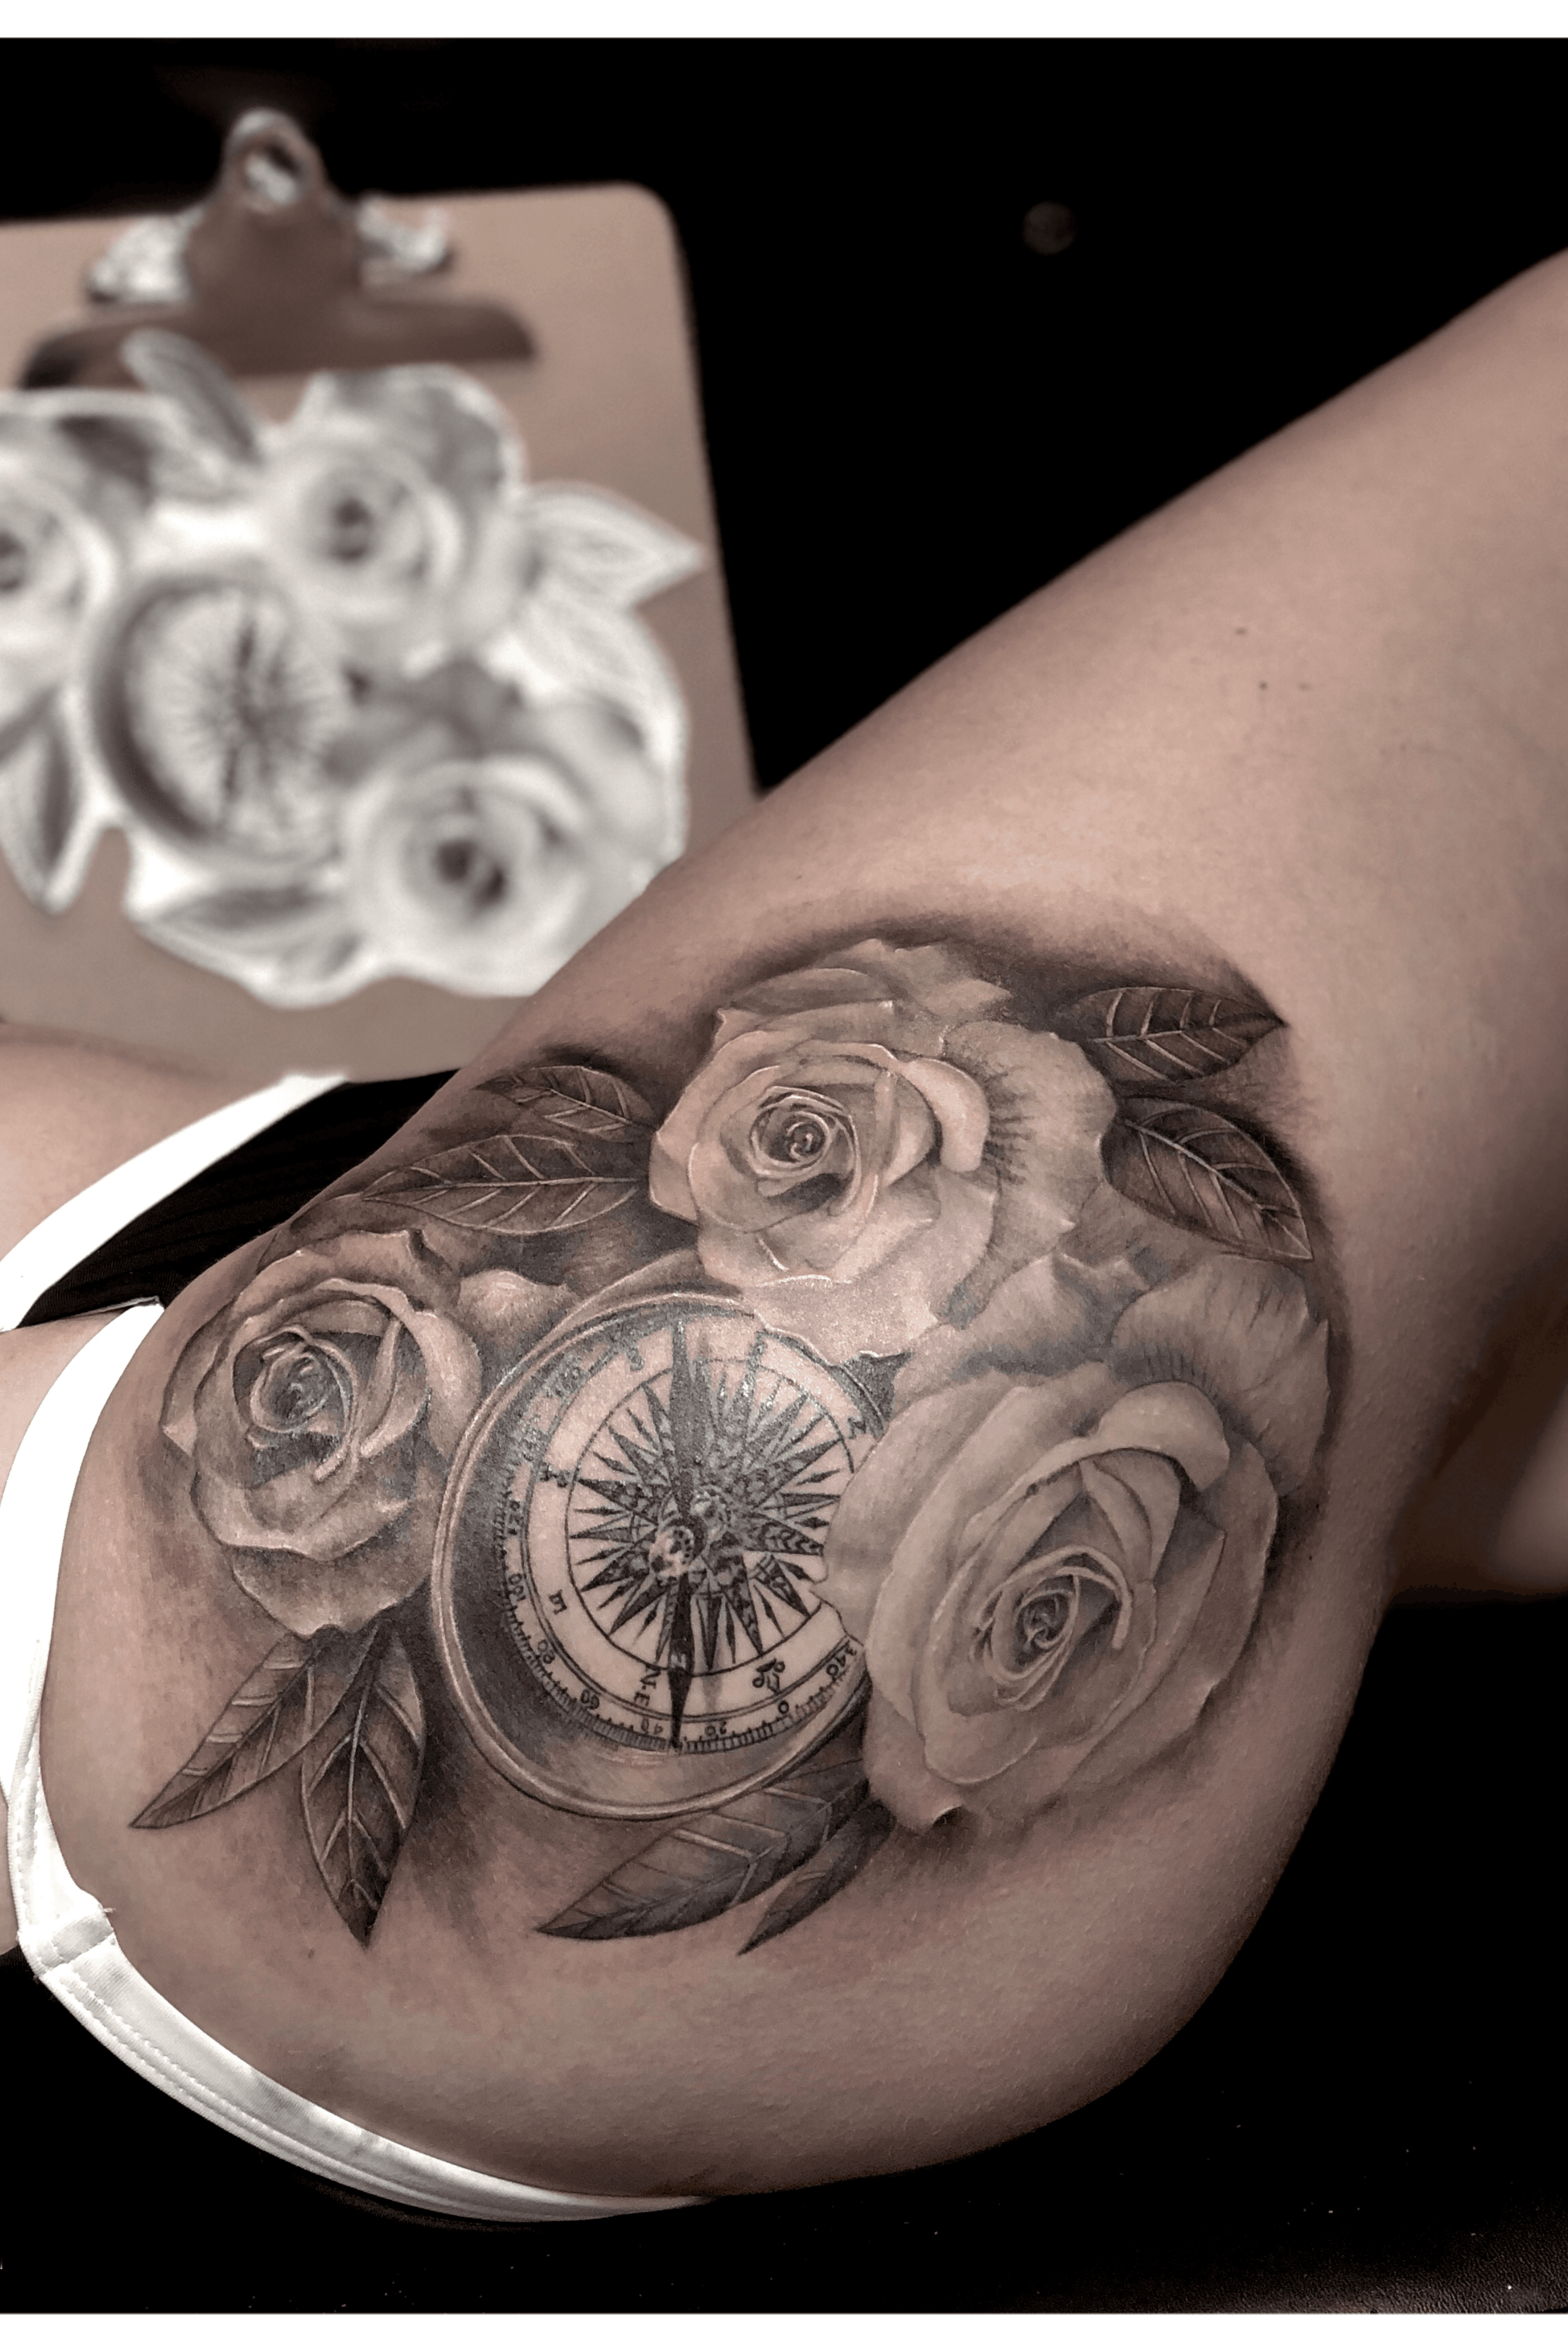 Tattoo of Clocks Eyes Arm